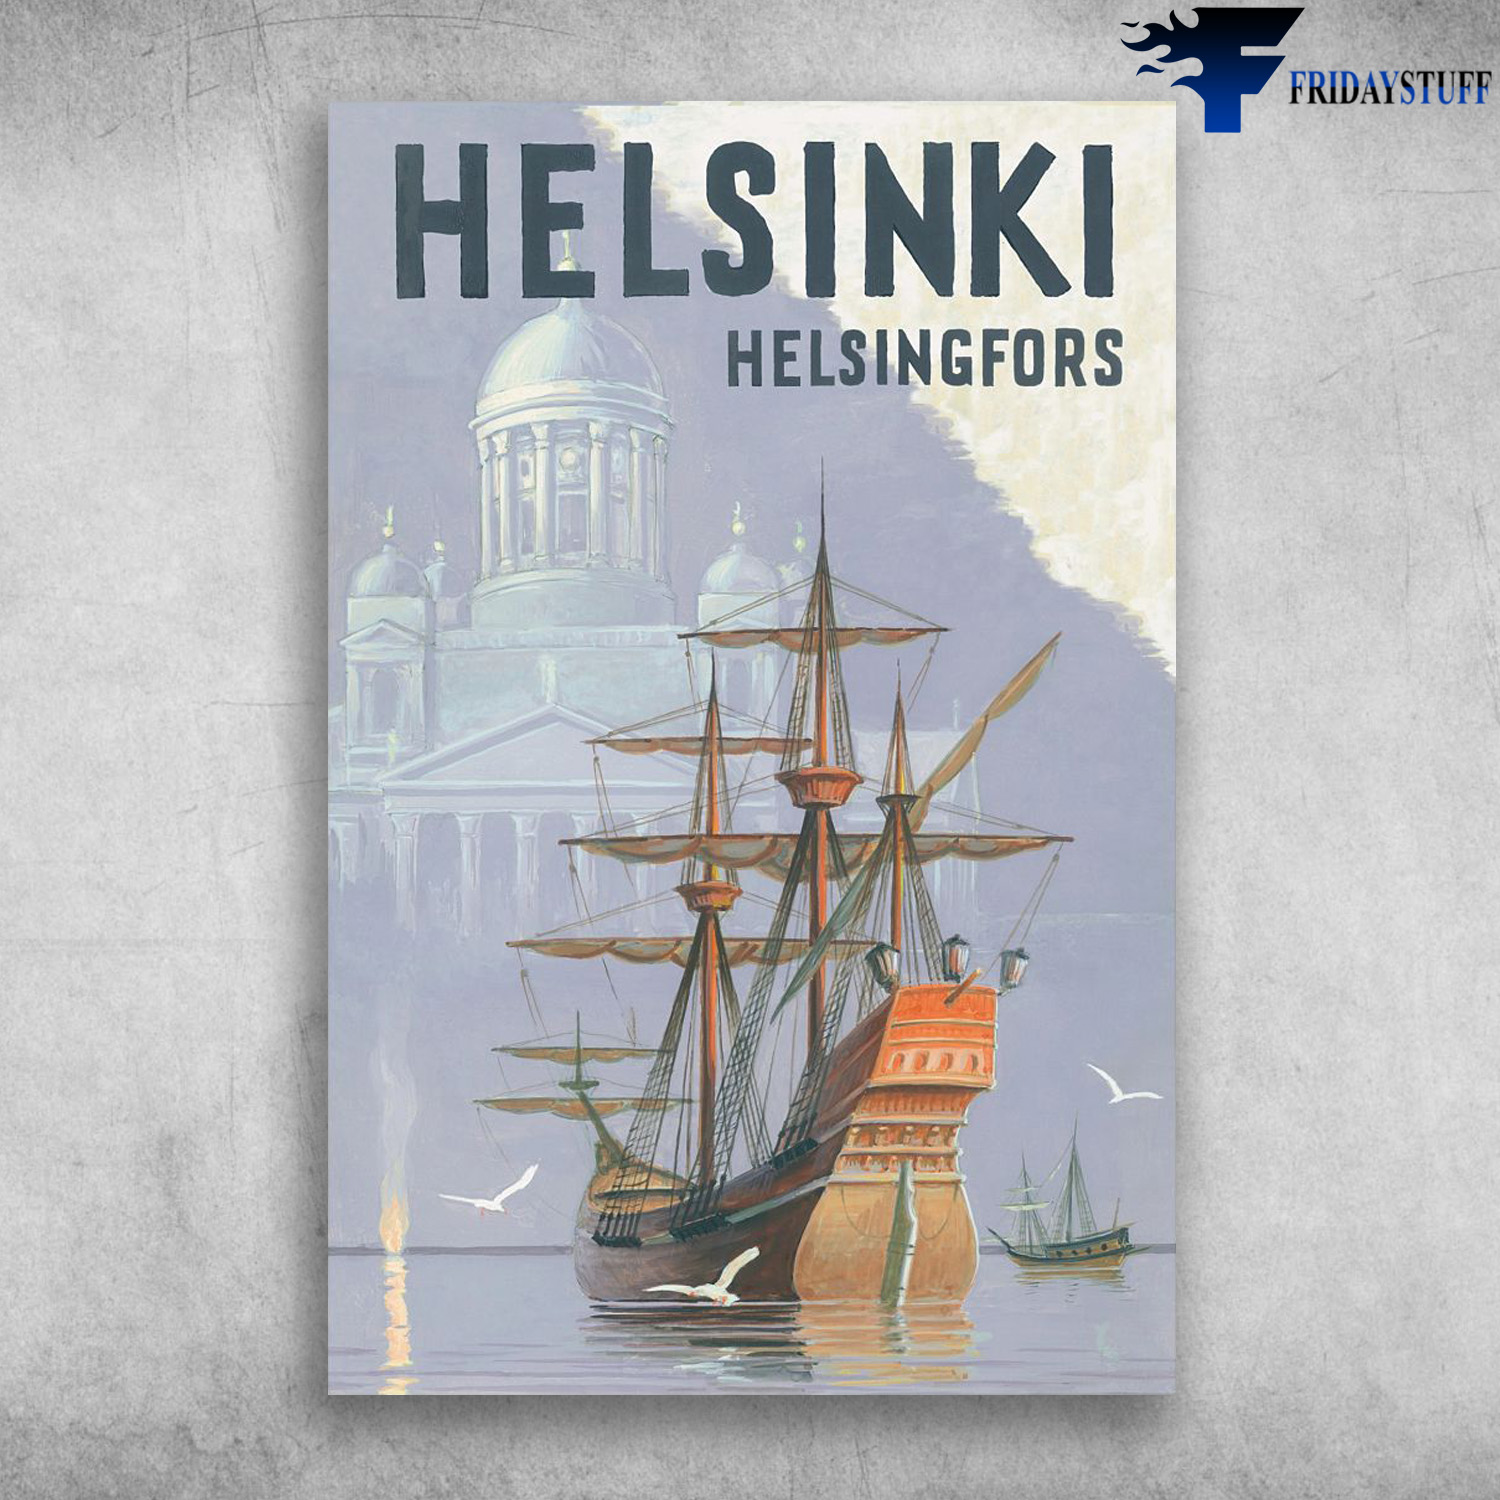 Helsinki Helsingfors Full Rigged Pinnace The Sailing Ship